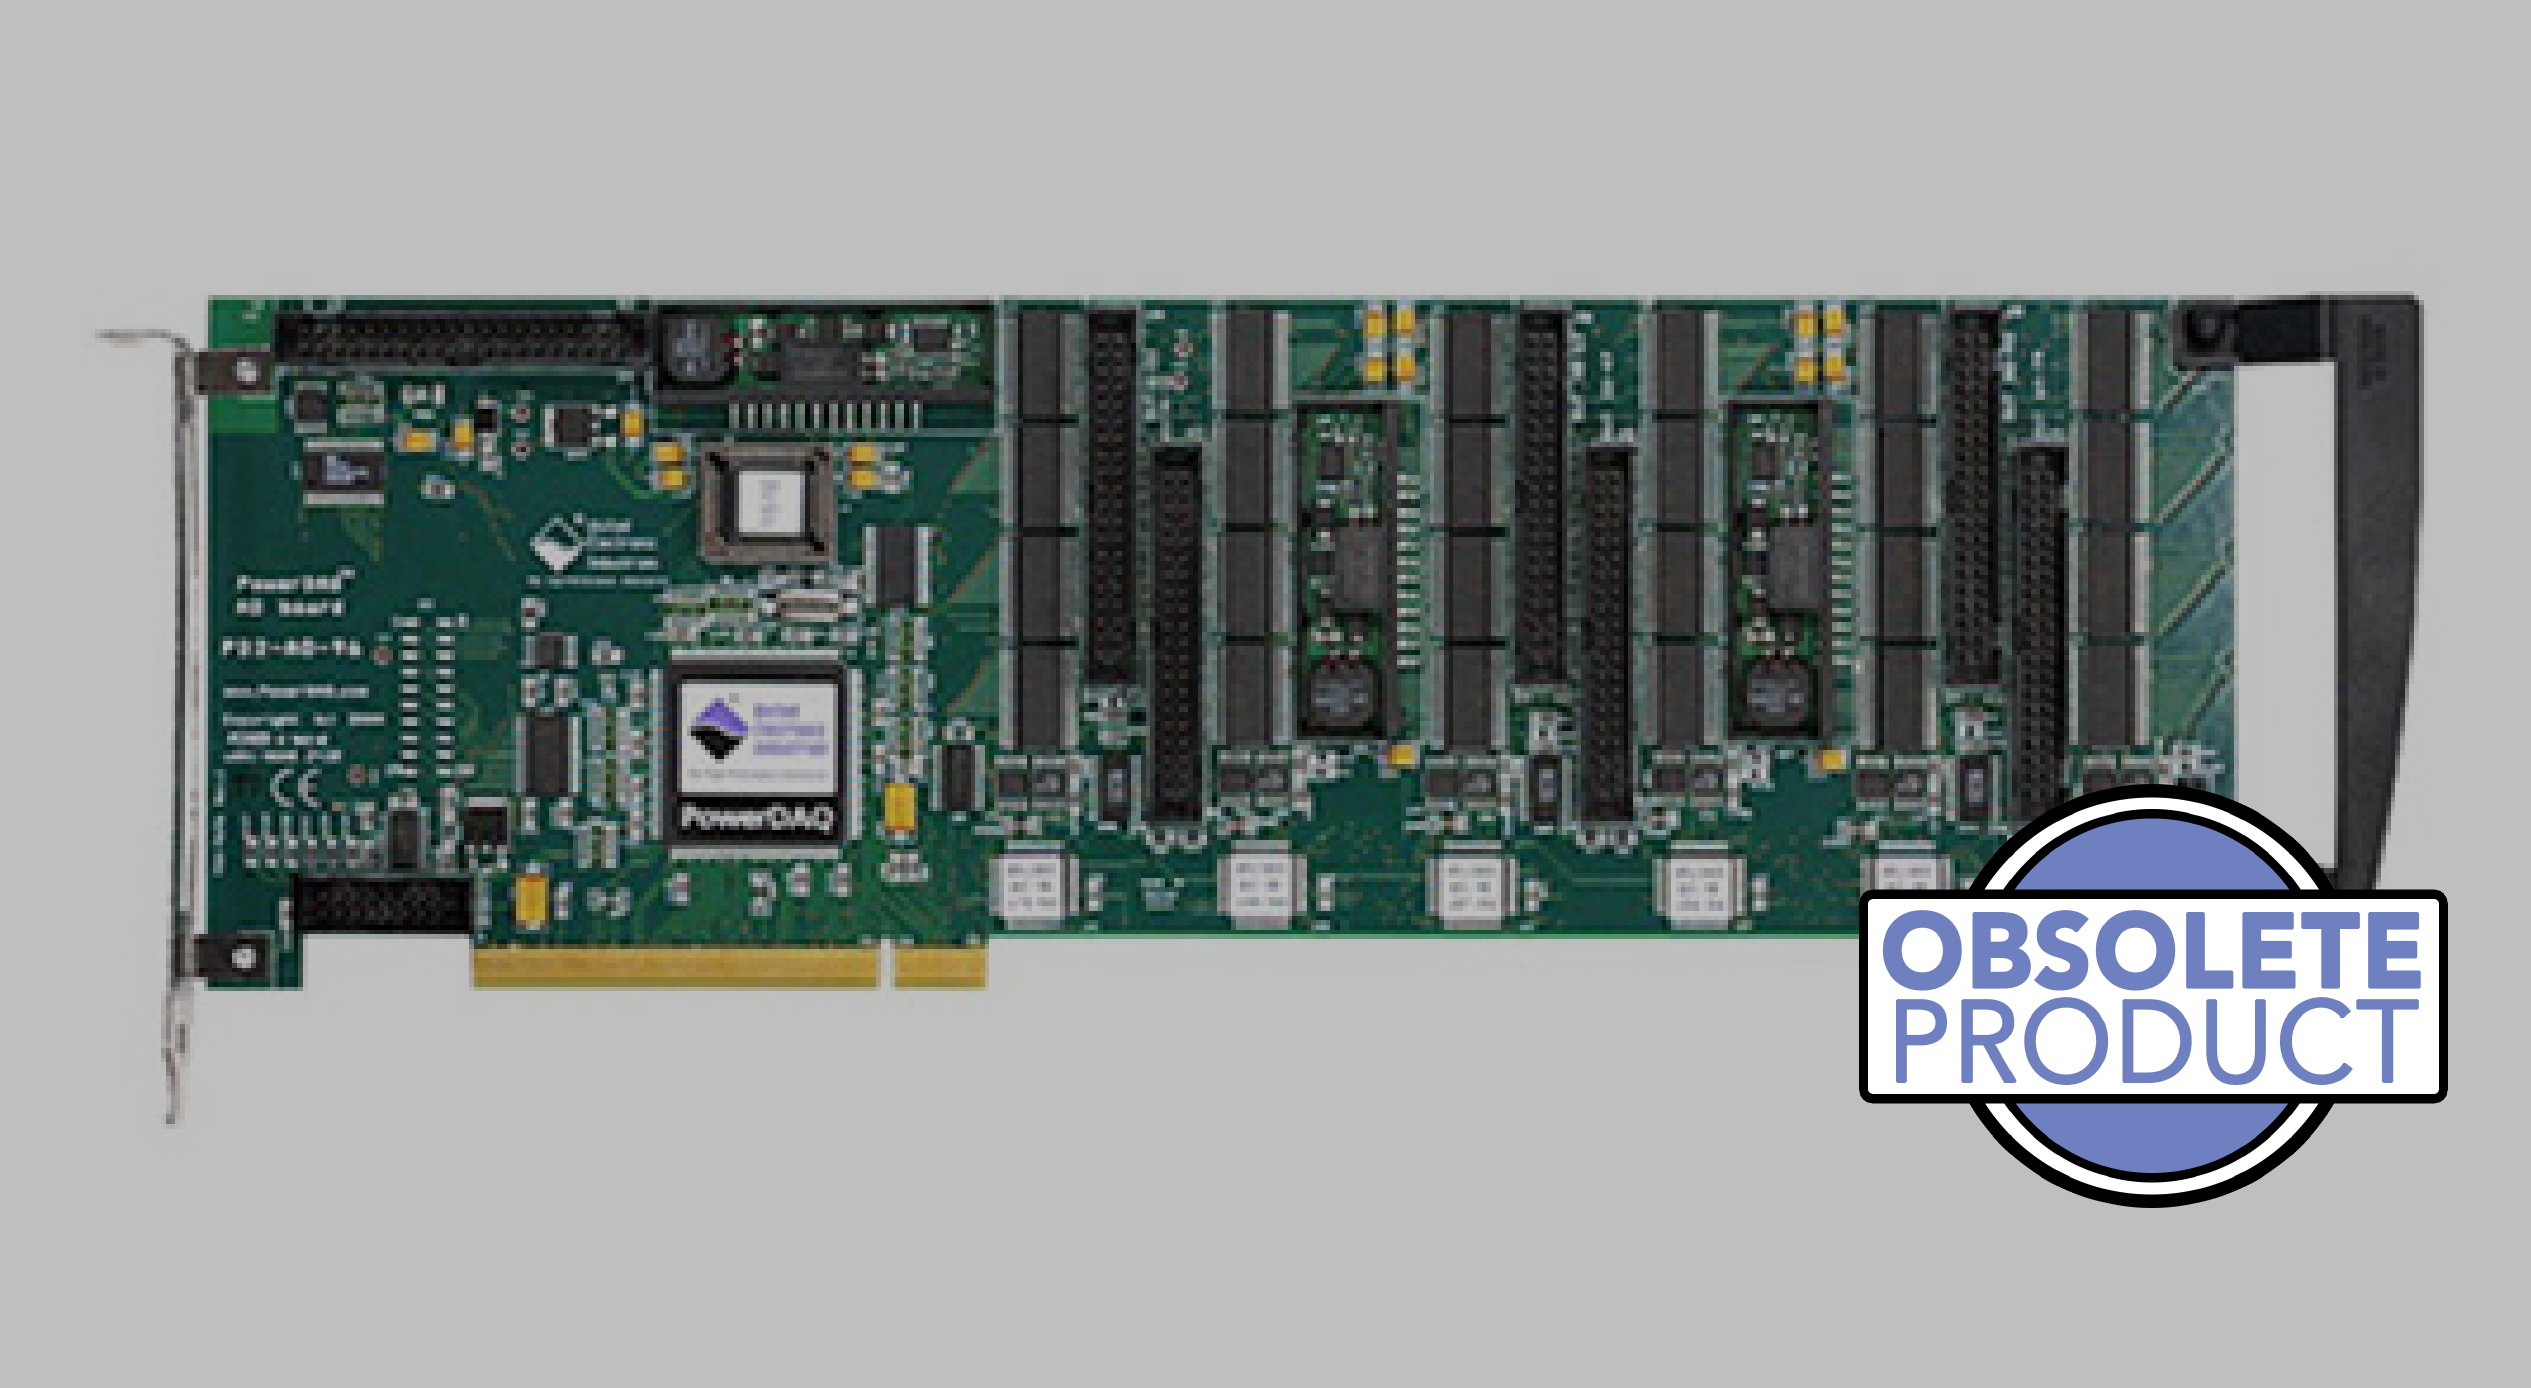 96-channel, 16-bit, 100 kS/s per channel PCI analog output board